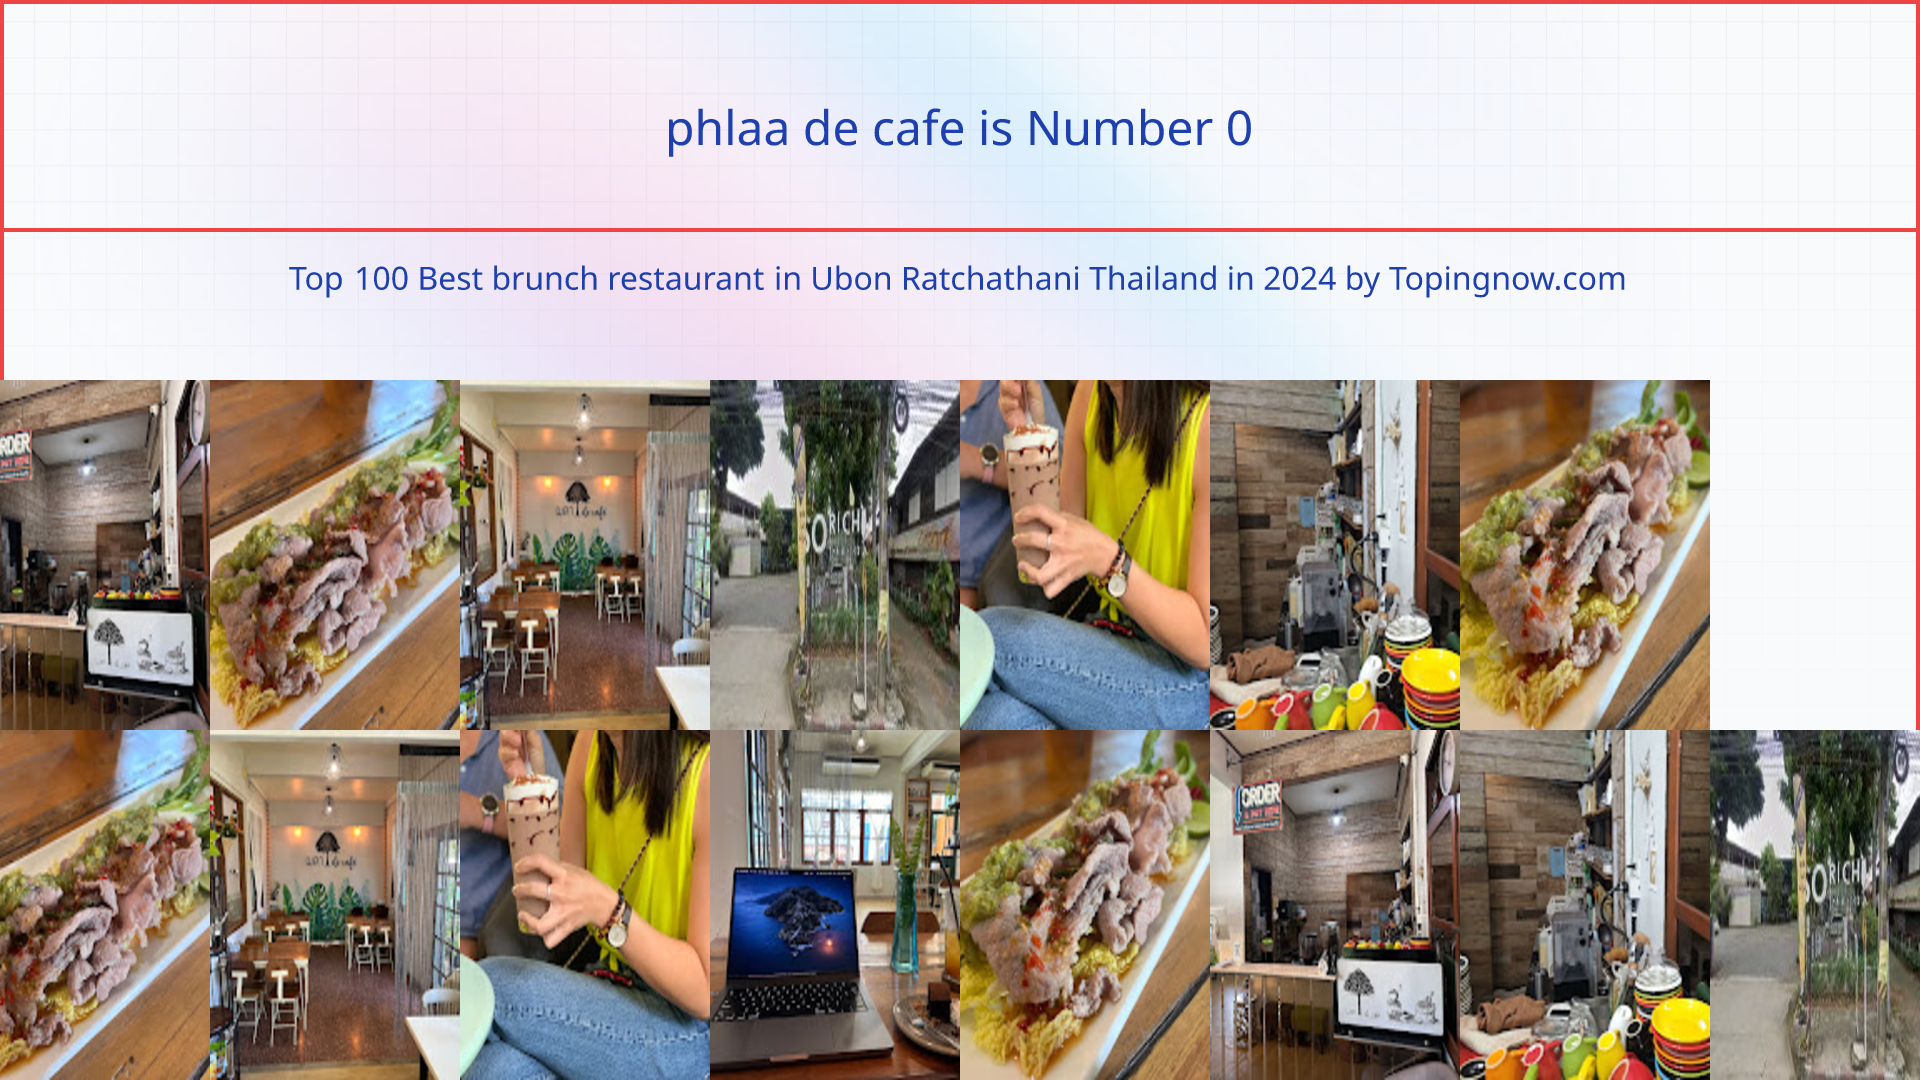 phlaa de cafe: Top 100 Best brunch restaurant in Ubon Ratchathani Thailand in 2024